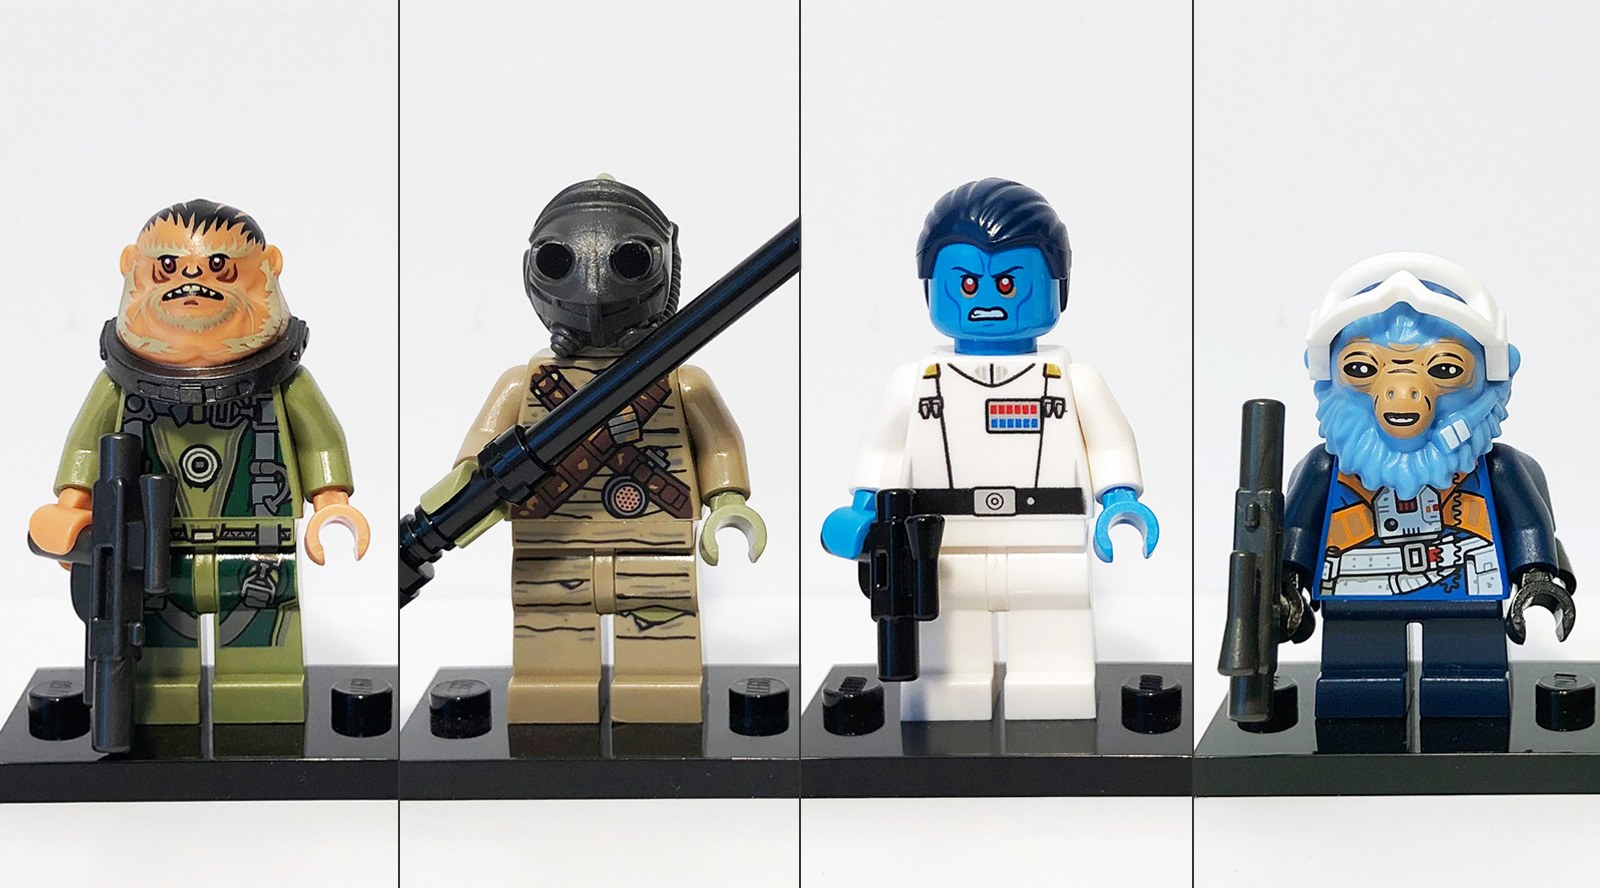 Custom Star Wars Calamari Warrior minifigures on lego bricks